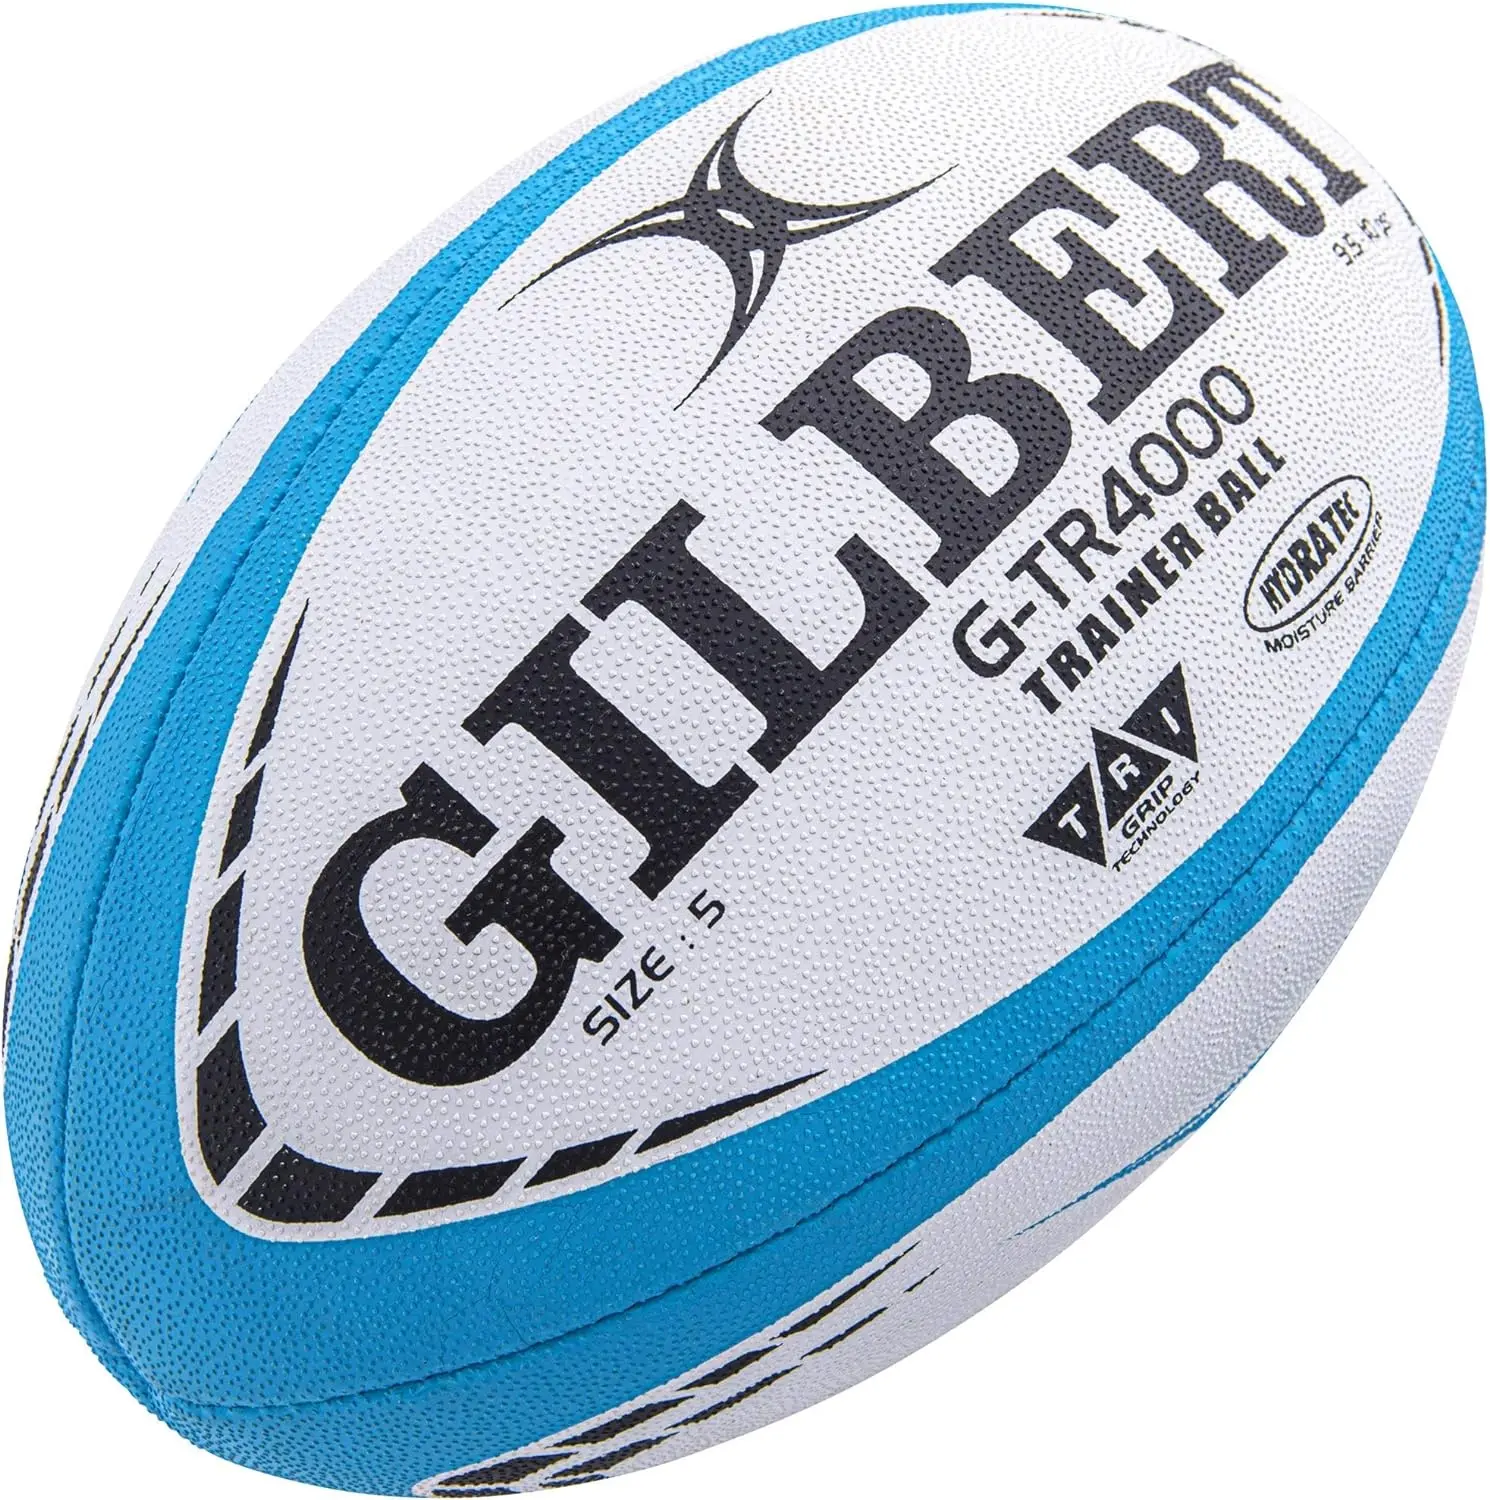 Bola de rugby para treinamento Gilbert G-TR4000 Bola de rugby para treinamento com tecnologia de aderência TRI azul